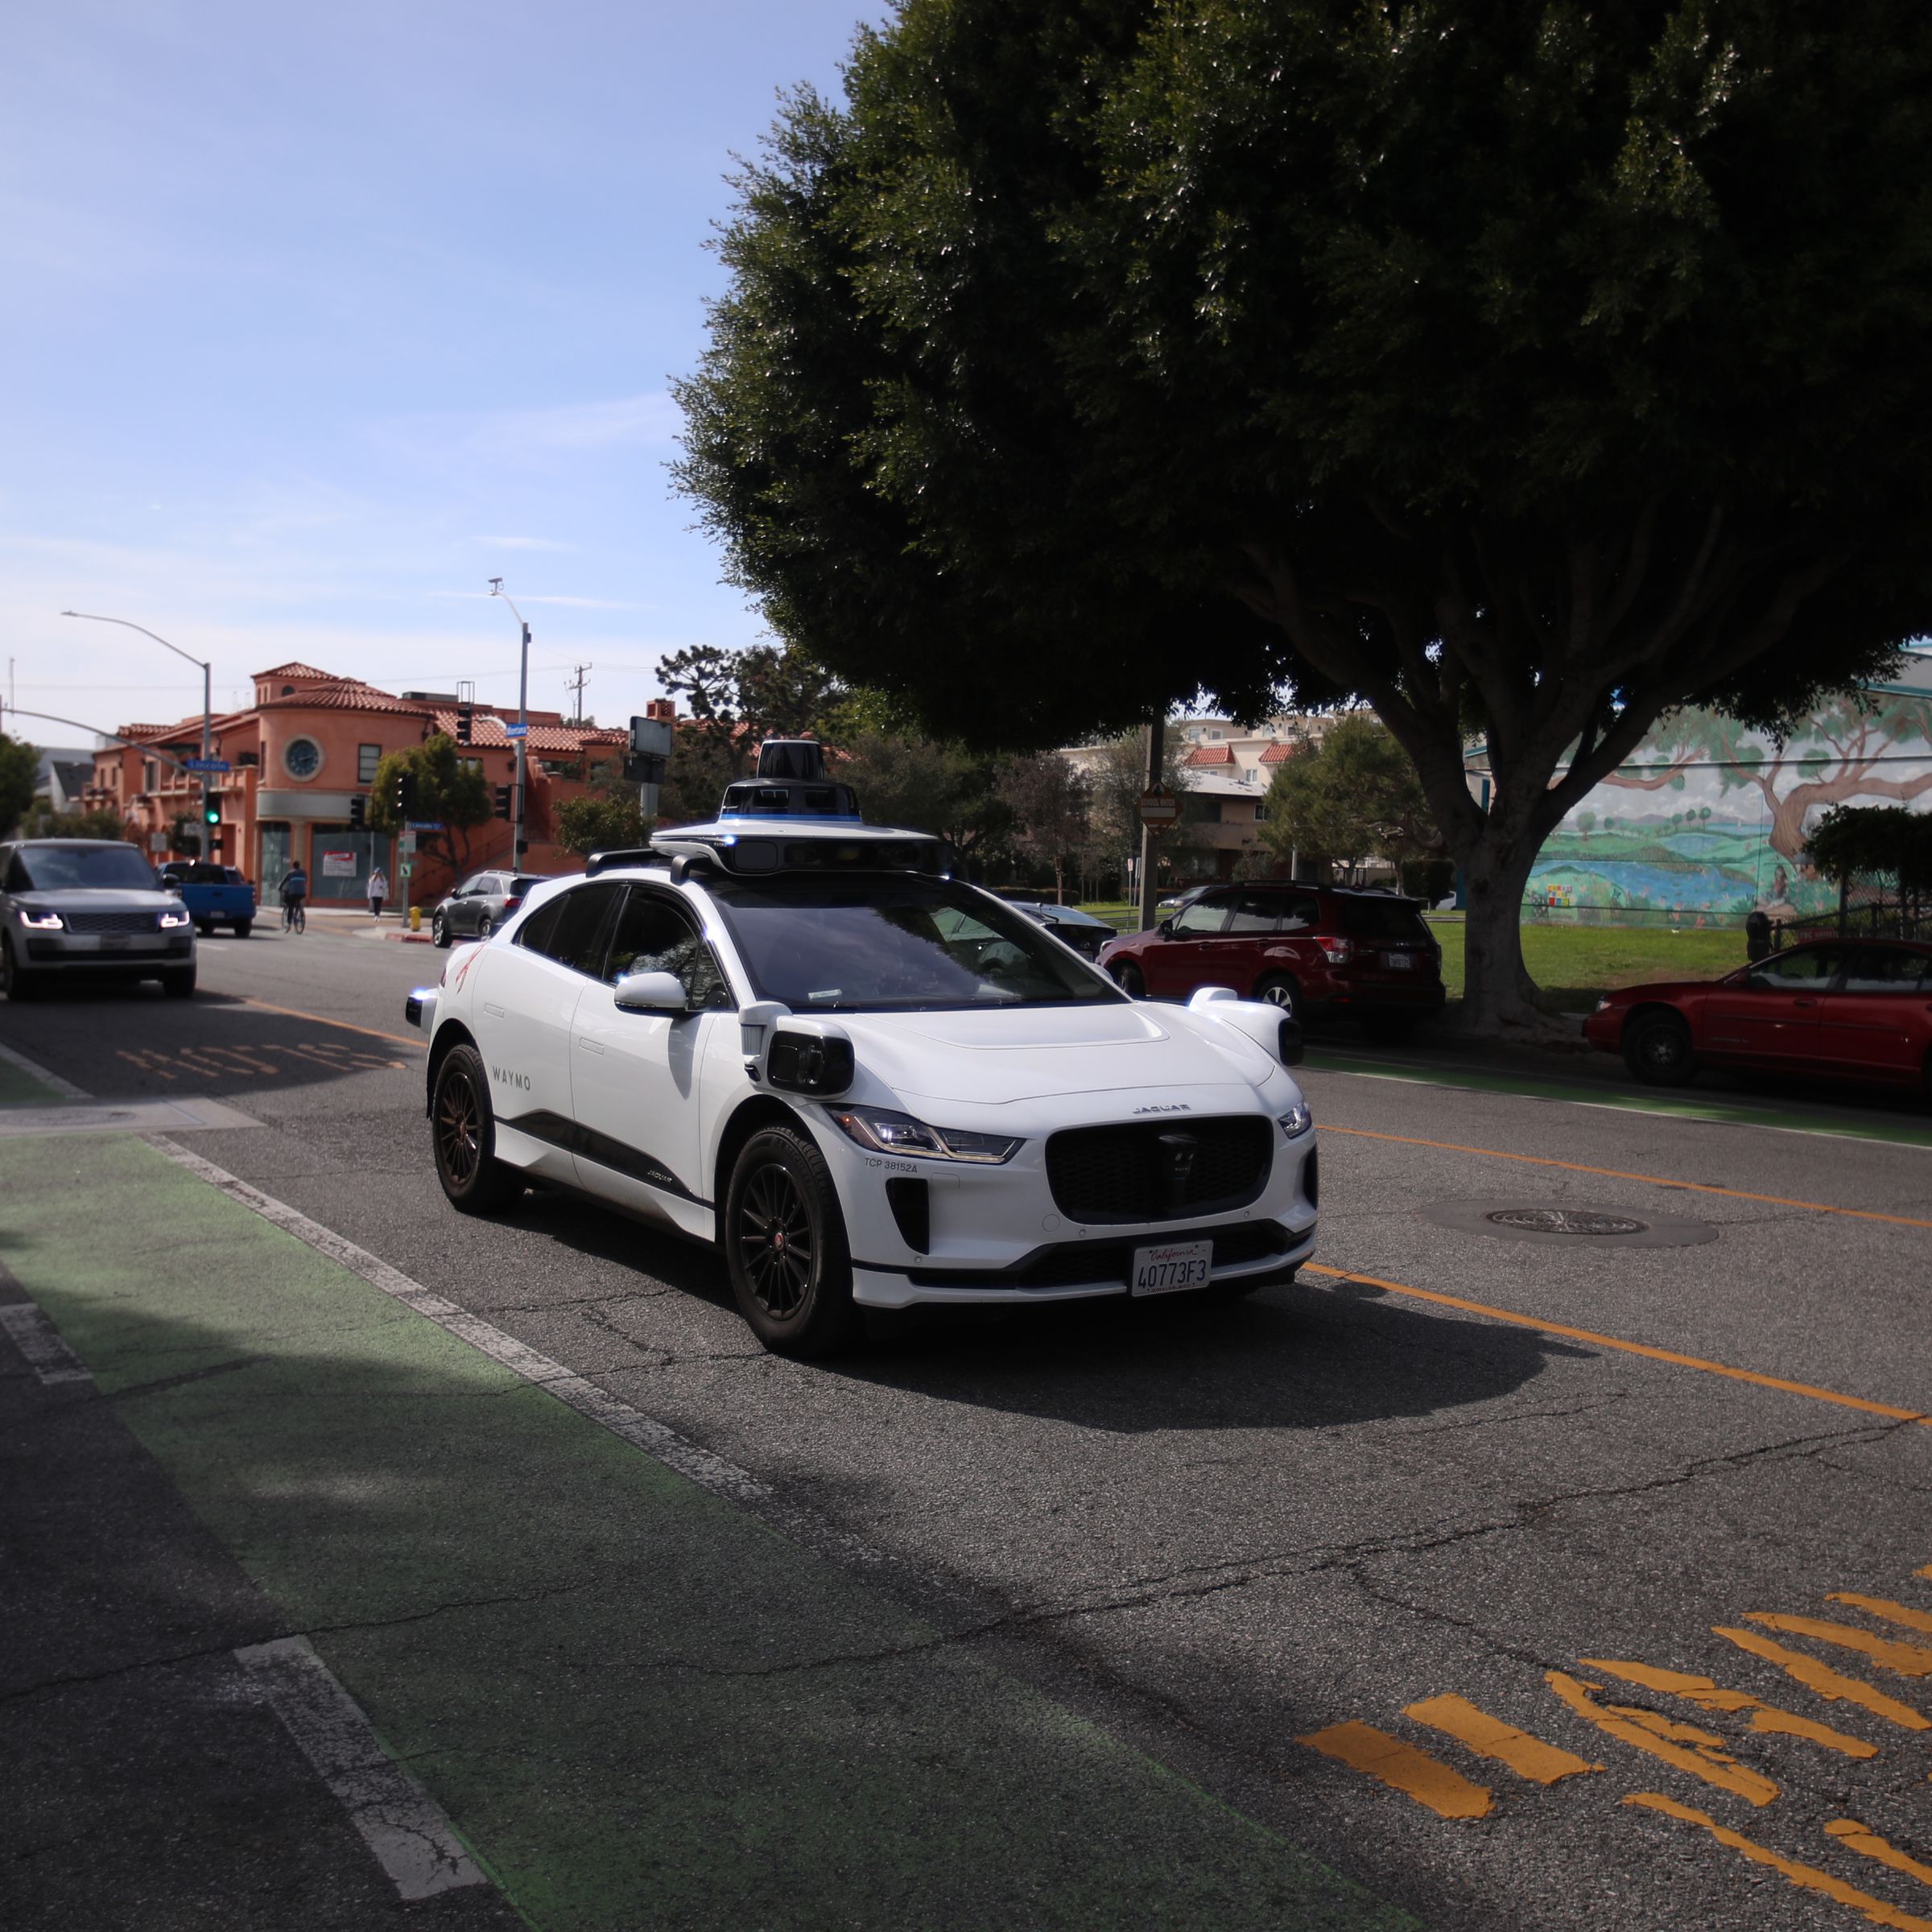 Self-driving Waymo cars on the road in Santa Monica